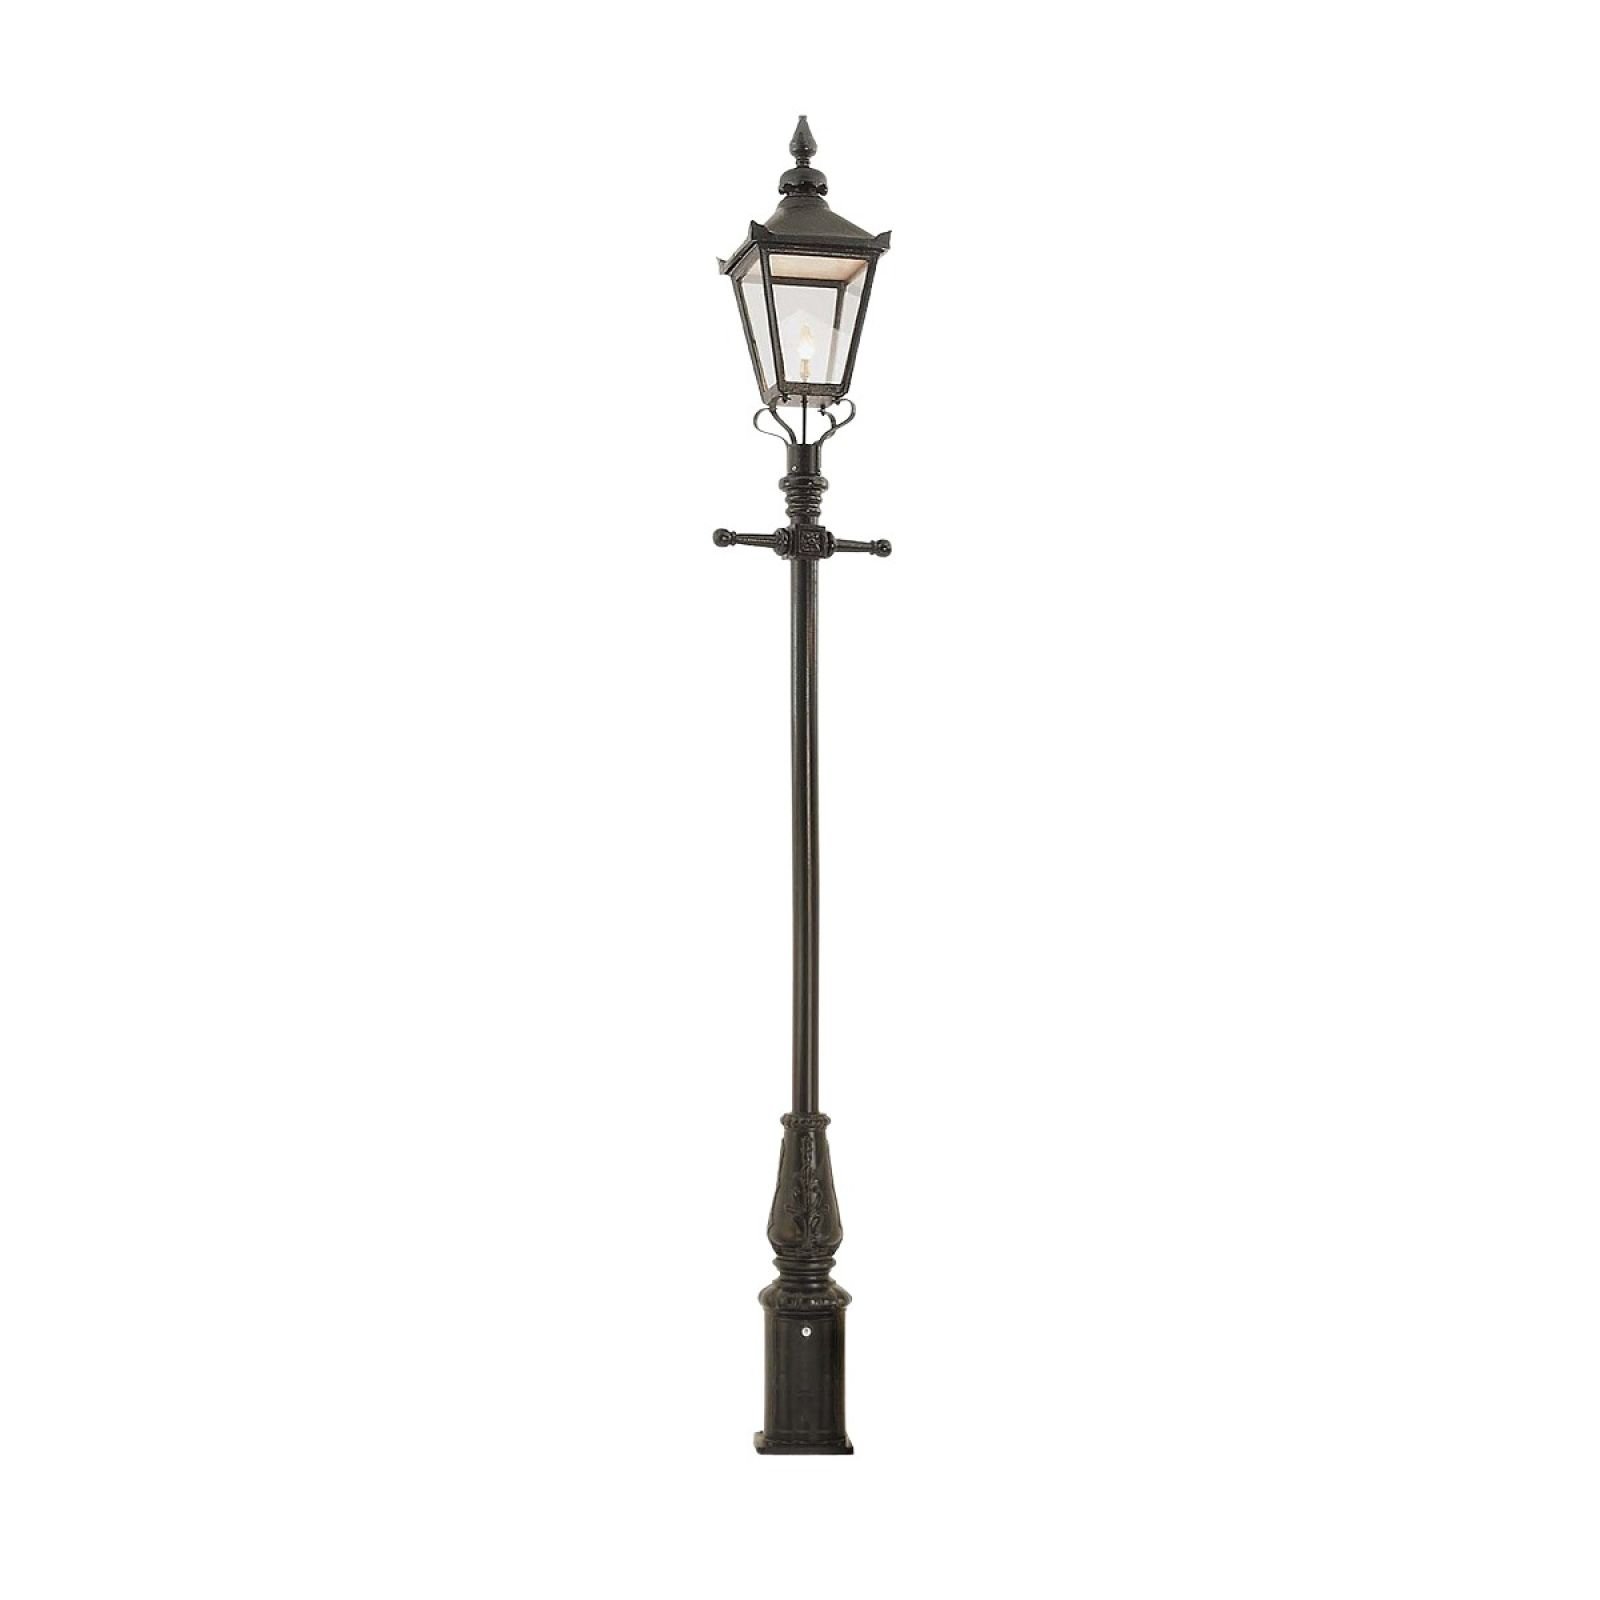 Victorian Garden Lamp Post (style 5)